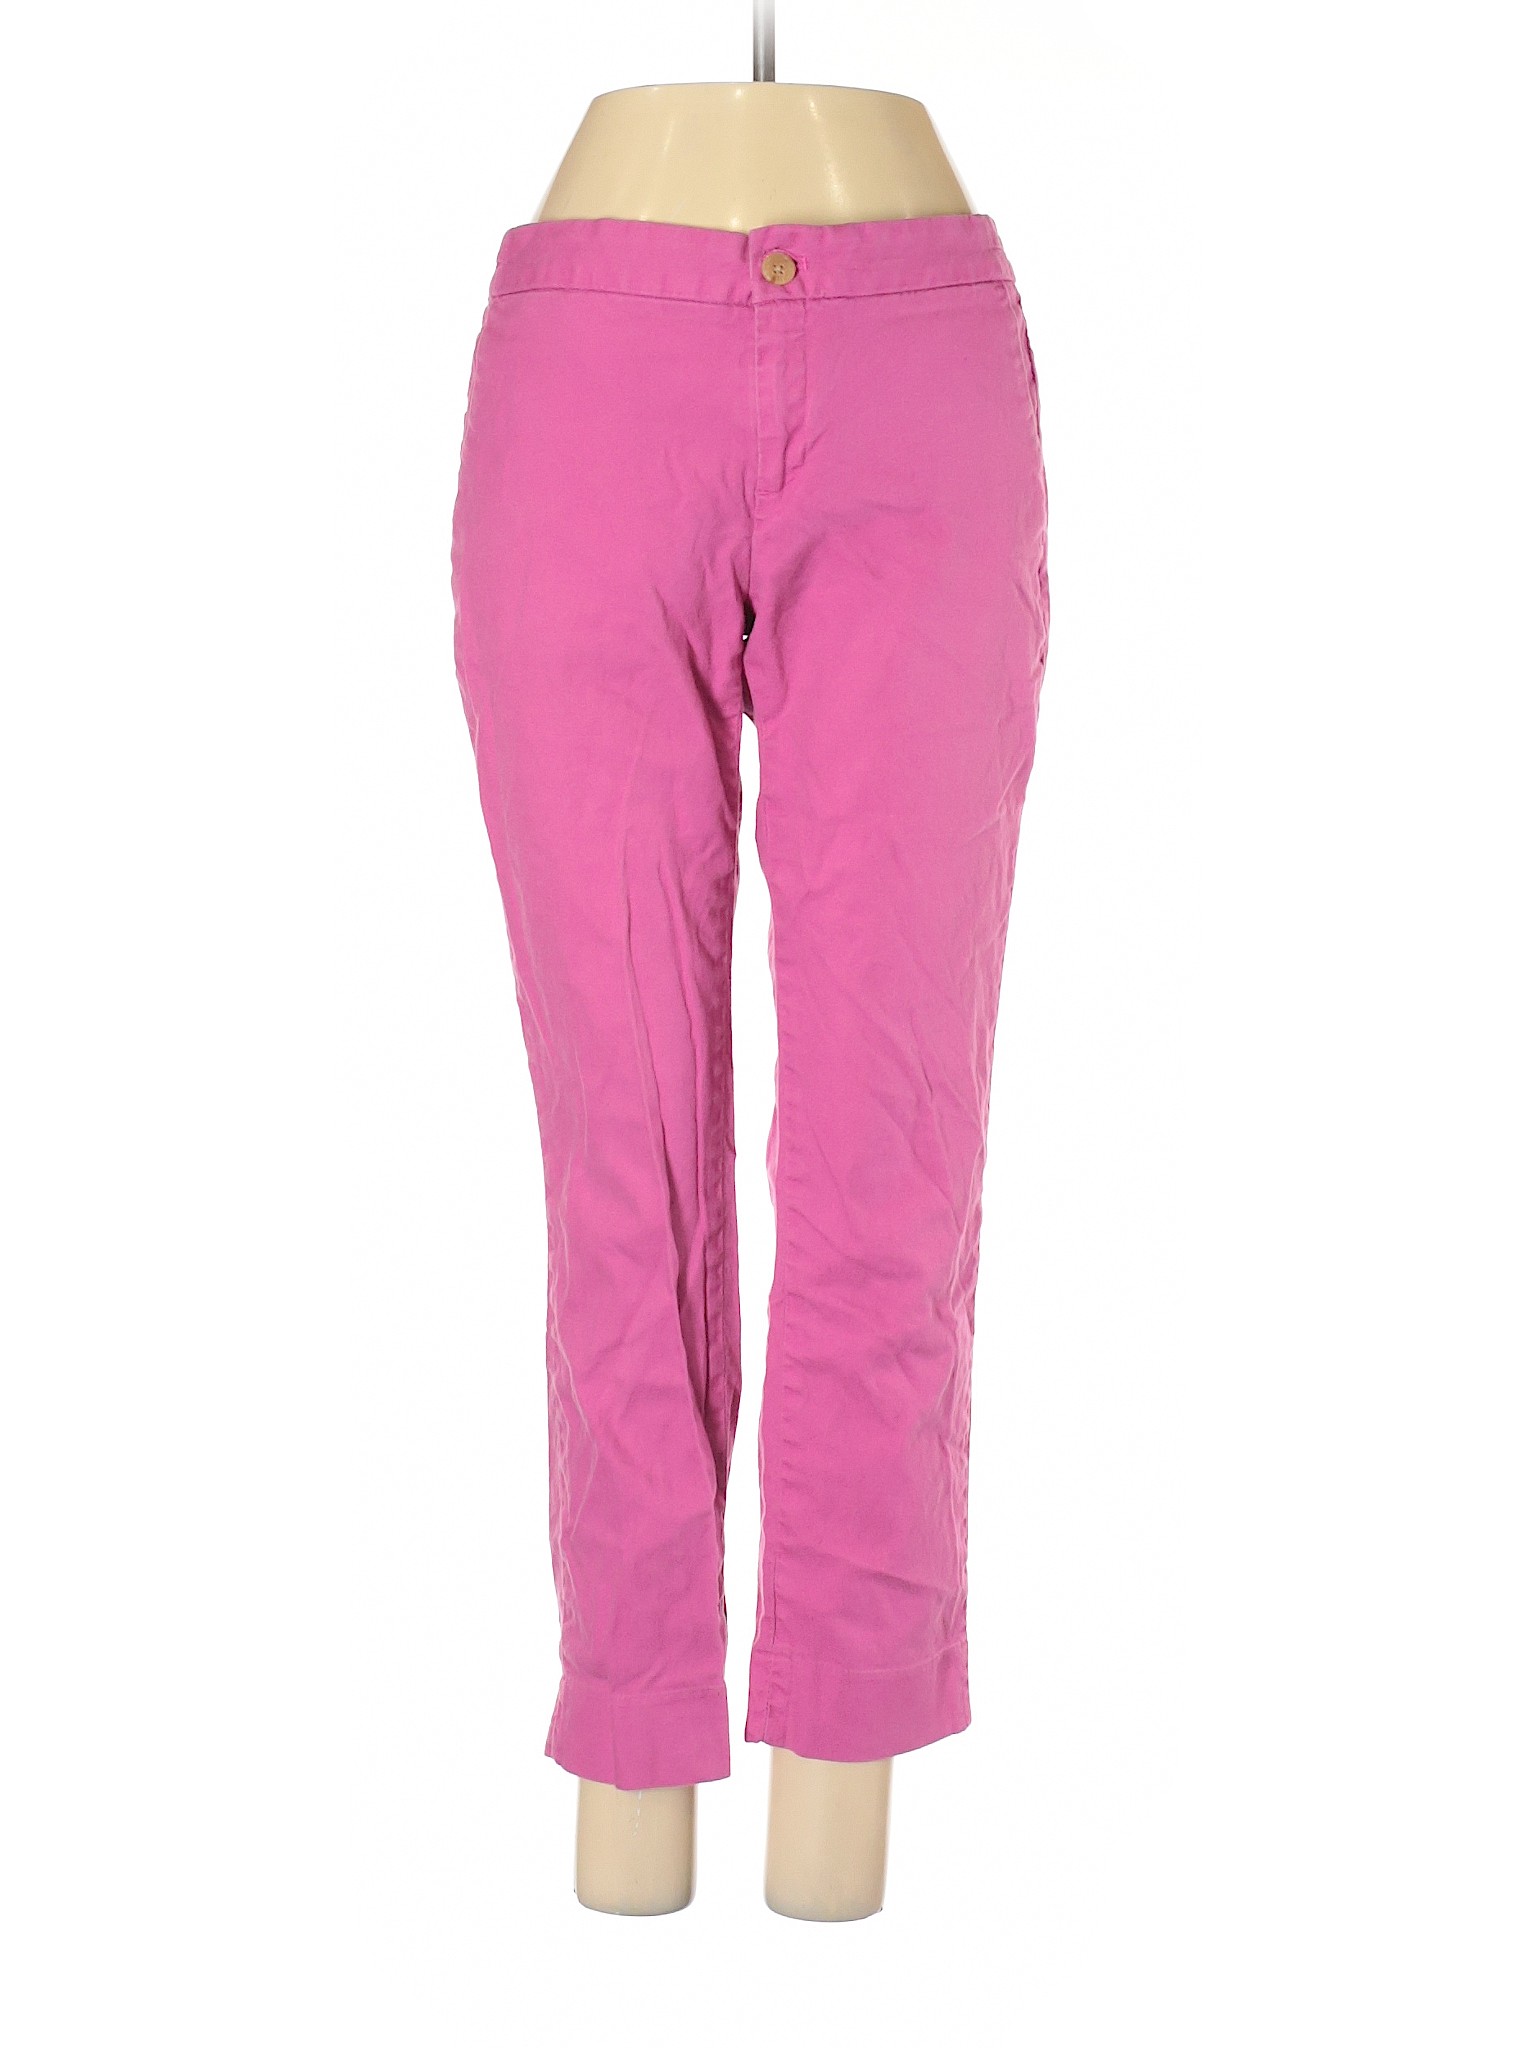 Banana Republic Women Pink Dress Pants 0 | eBay